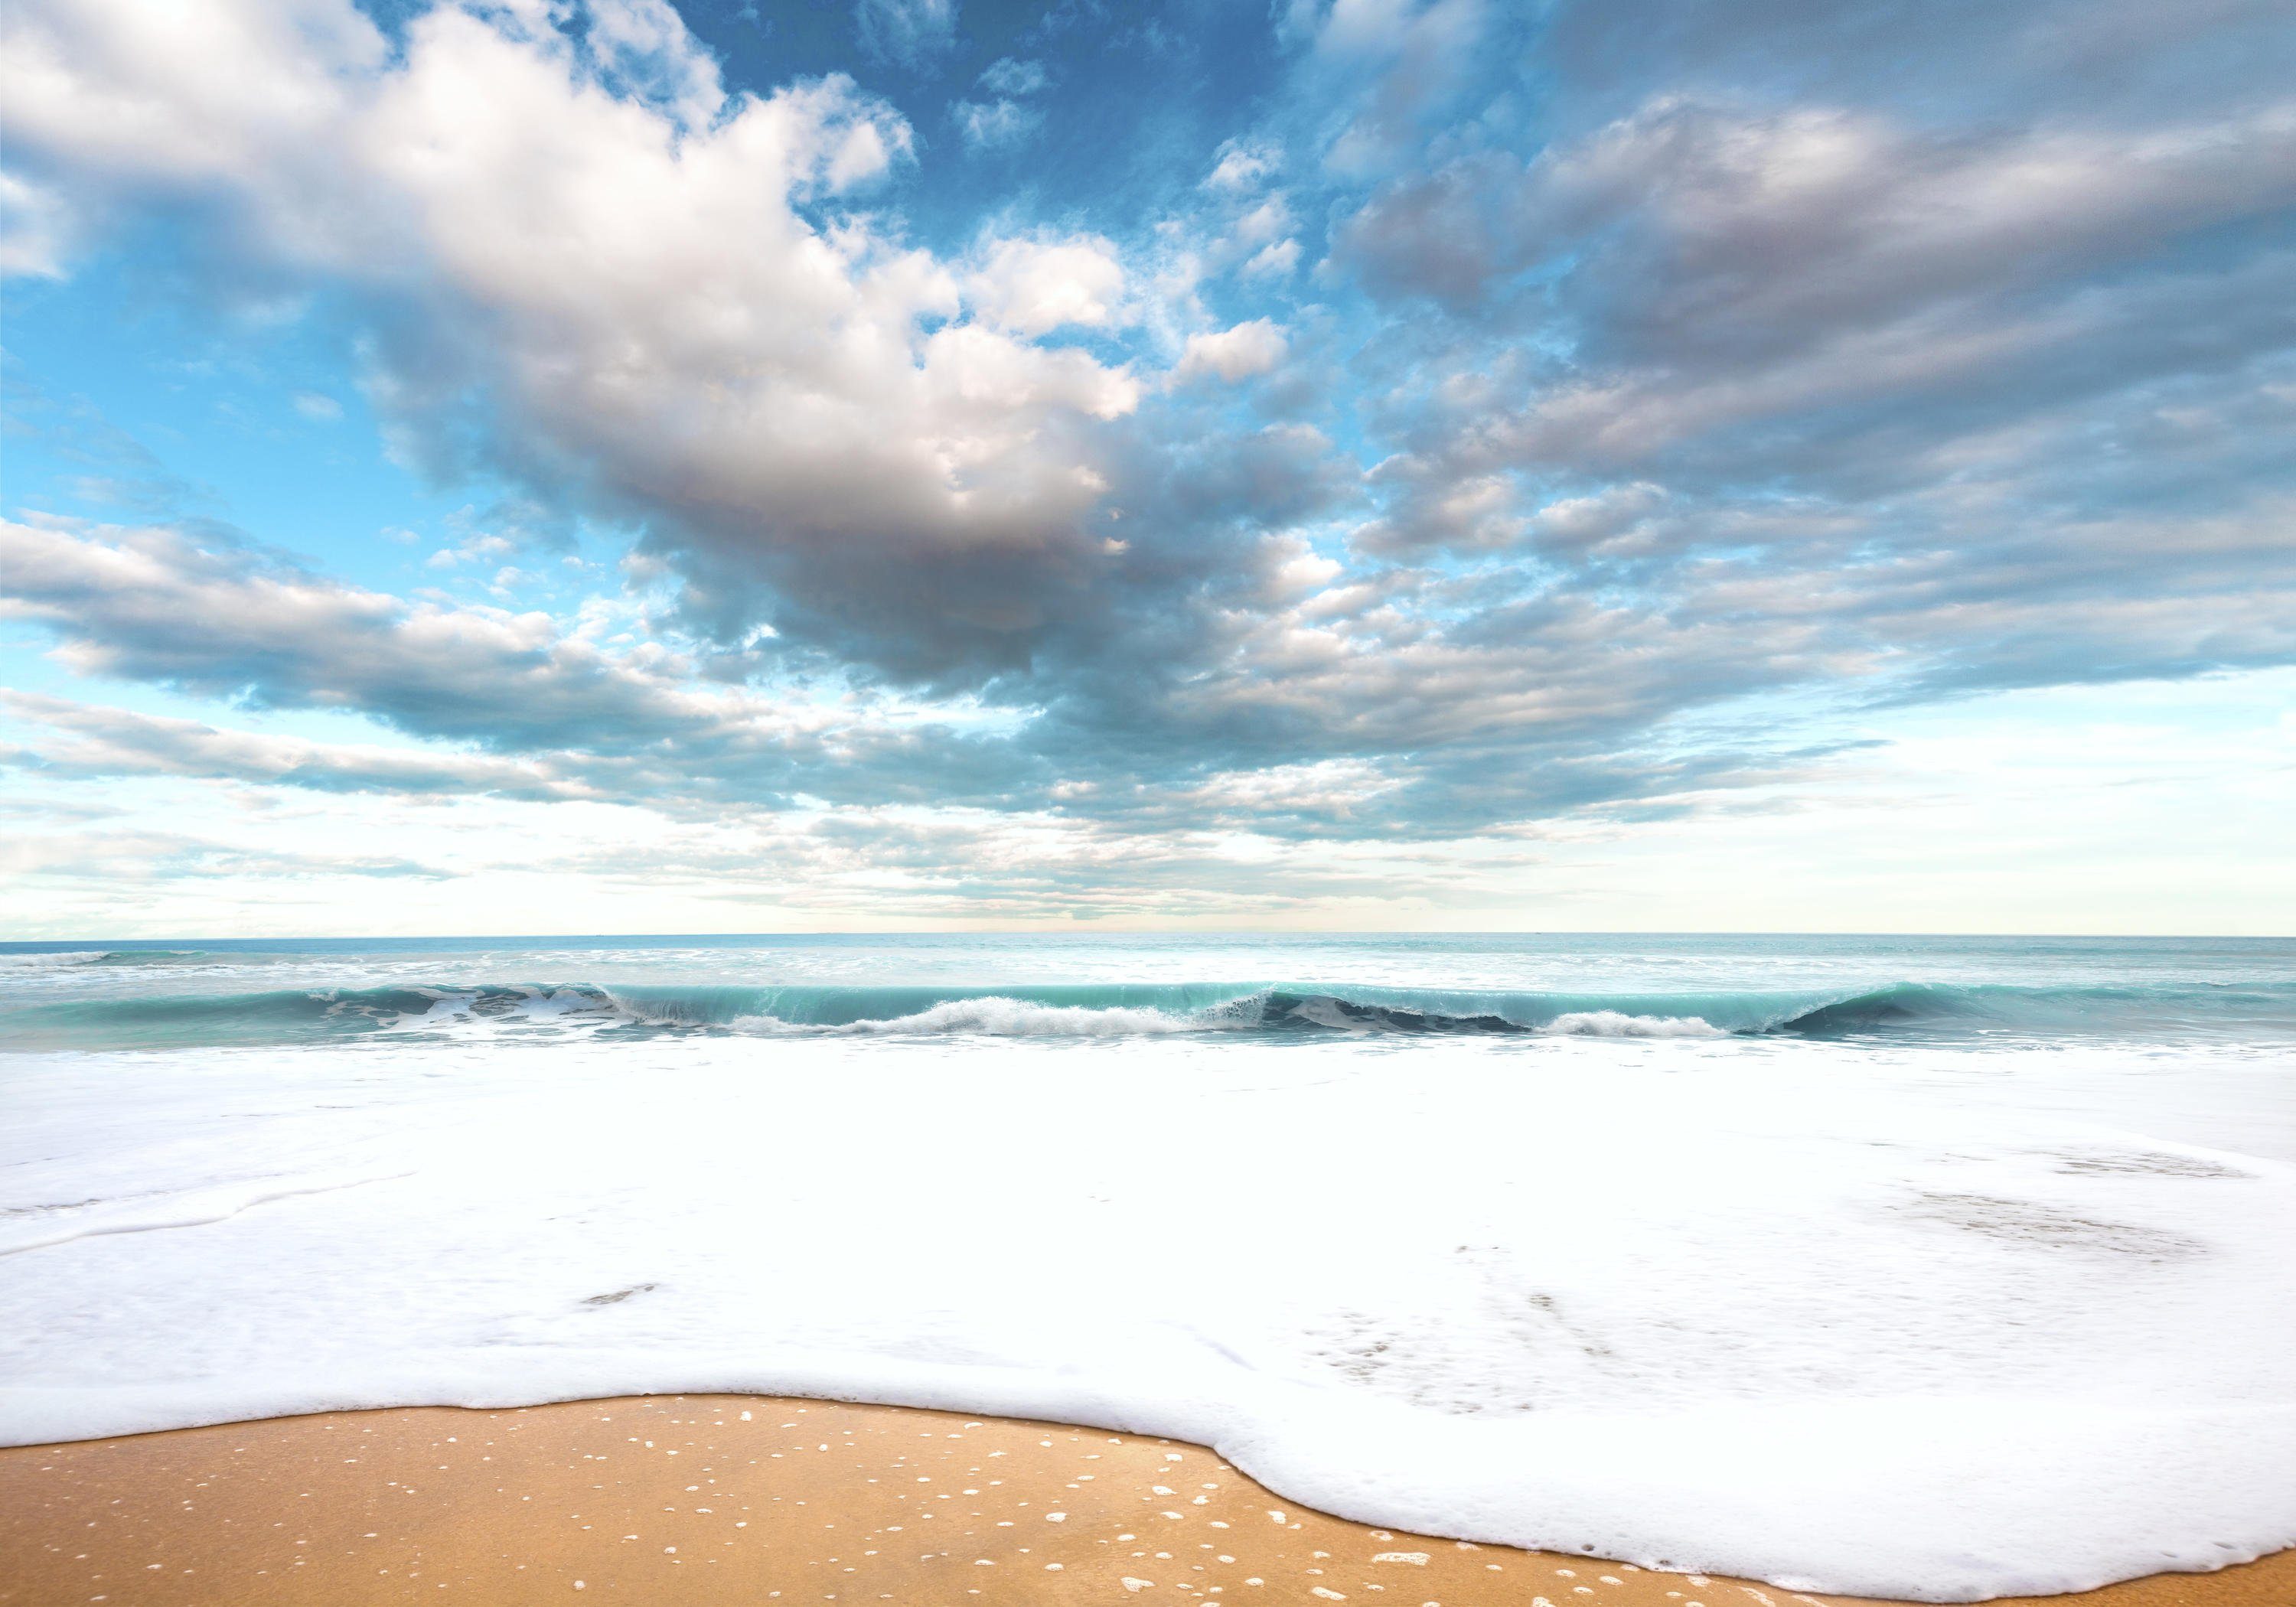 wandmotiv24 Fototapete Strand und idyllischer blauer Himmel, glatt, Wandtapete, Motivtapete, matt, Vliestapete